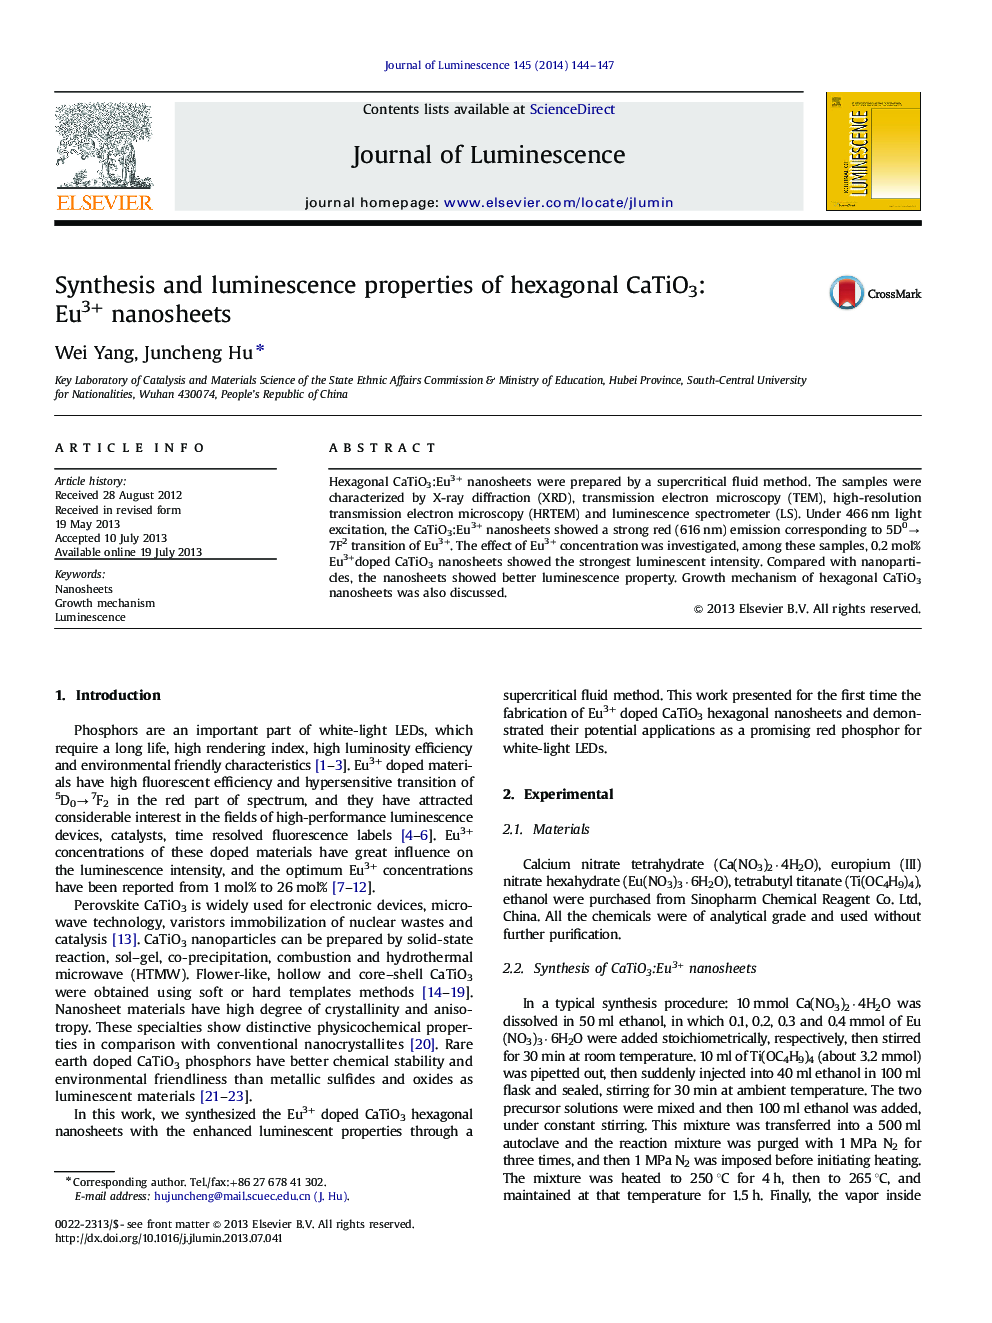 Synthesis and luminescence properties of hexagonal CaTiO3:Eu3+ nanosheets